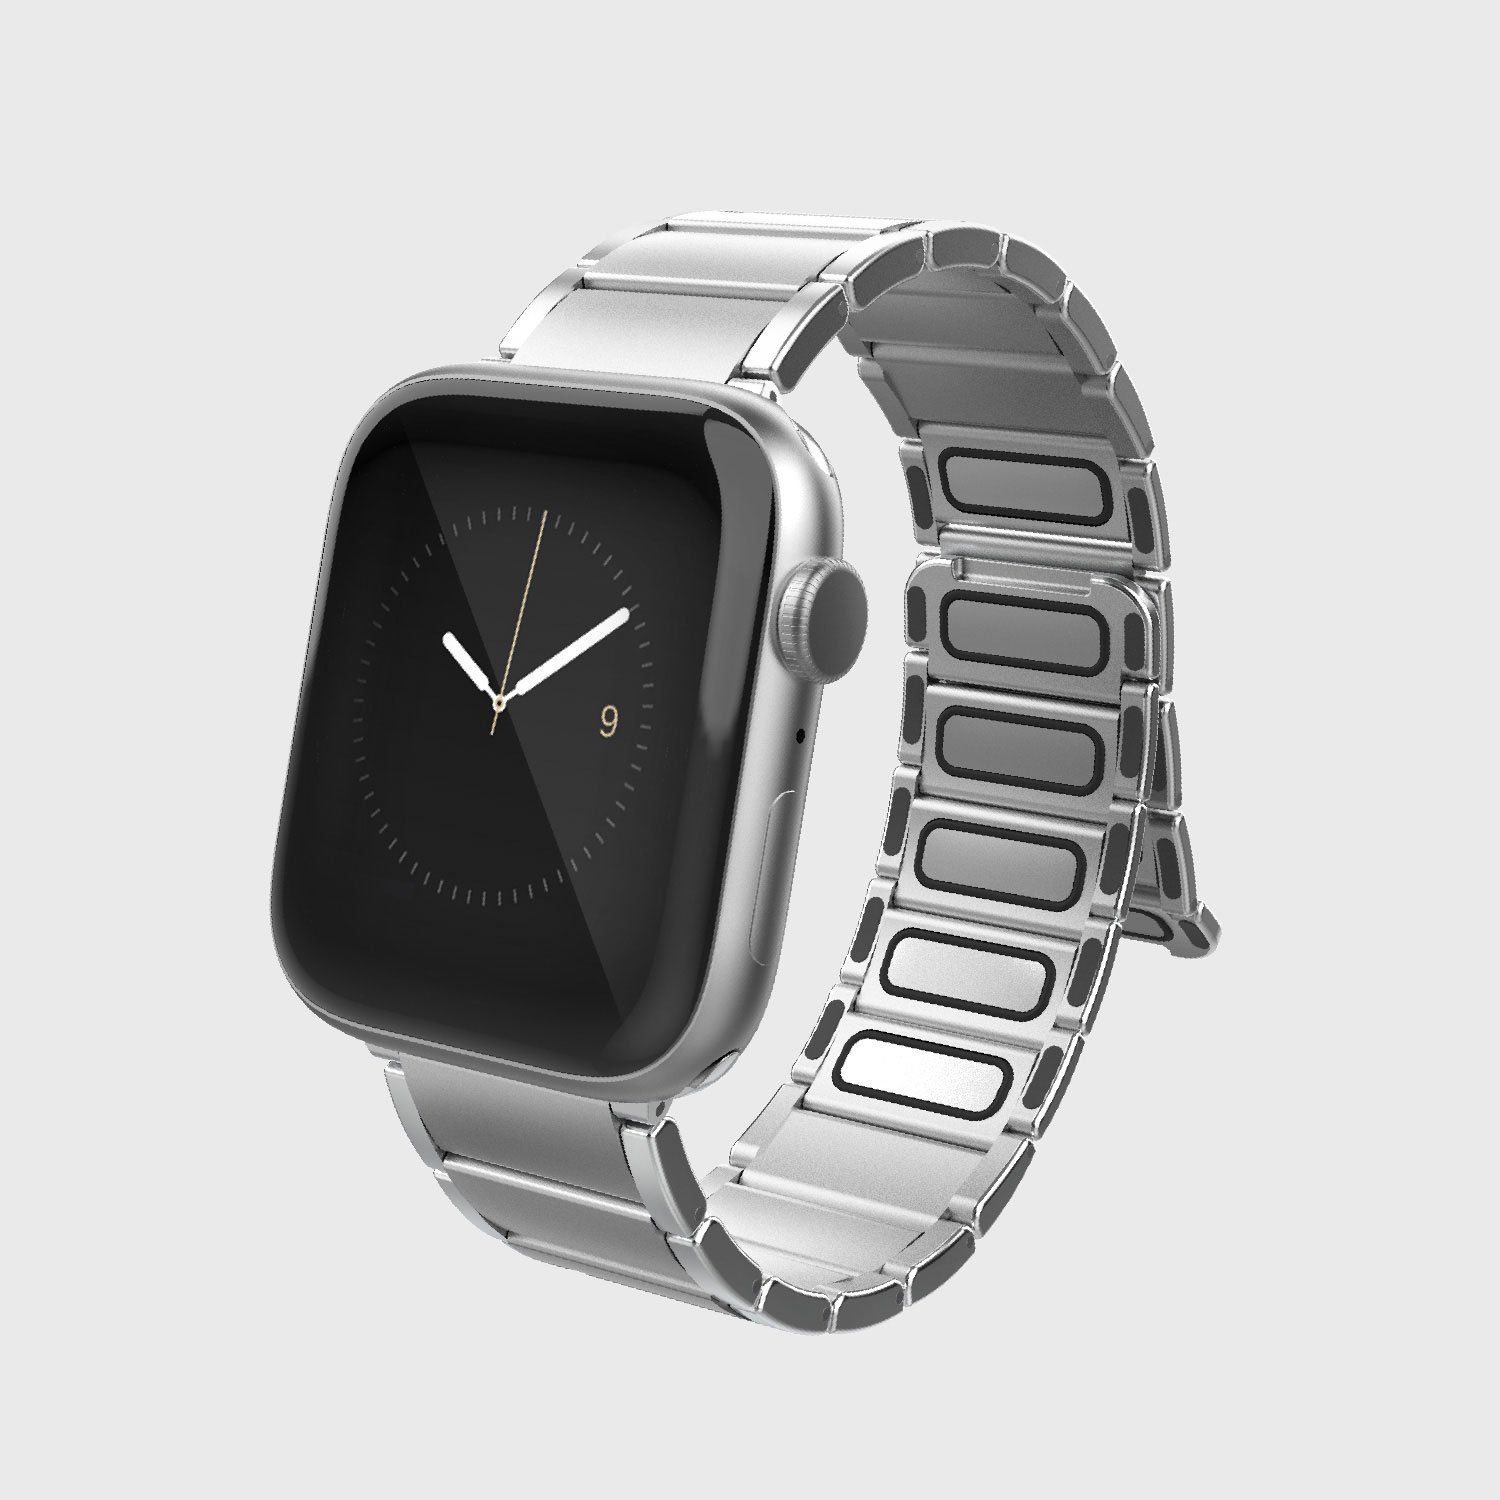 Case-Mate Metal Linked Band for Apple Watch [42-44mm] (Black) - JB Hi-Fi